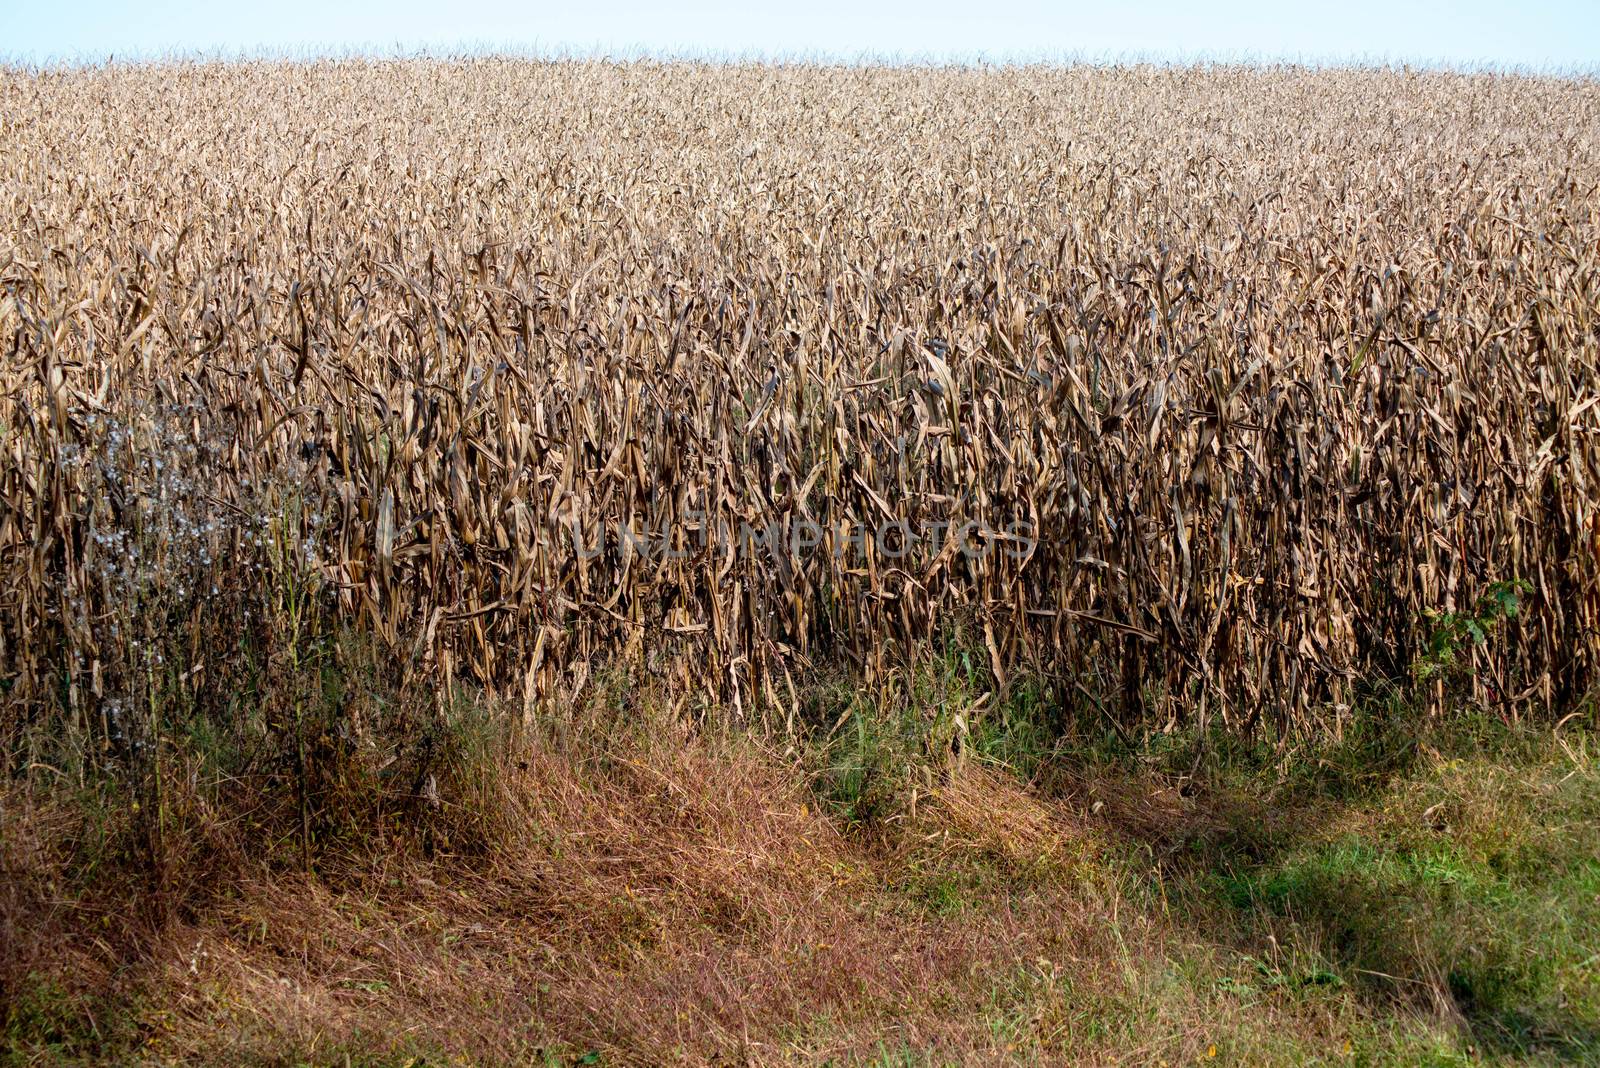 Brown fields of tall corn stalks ready for harvest by marysalen